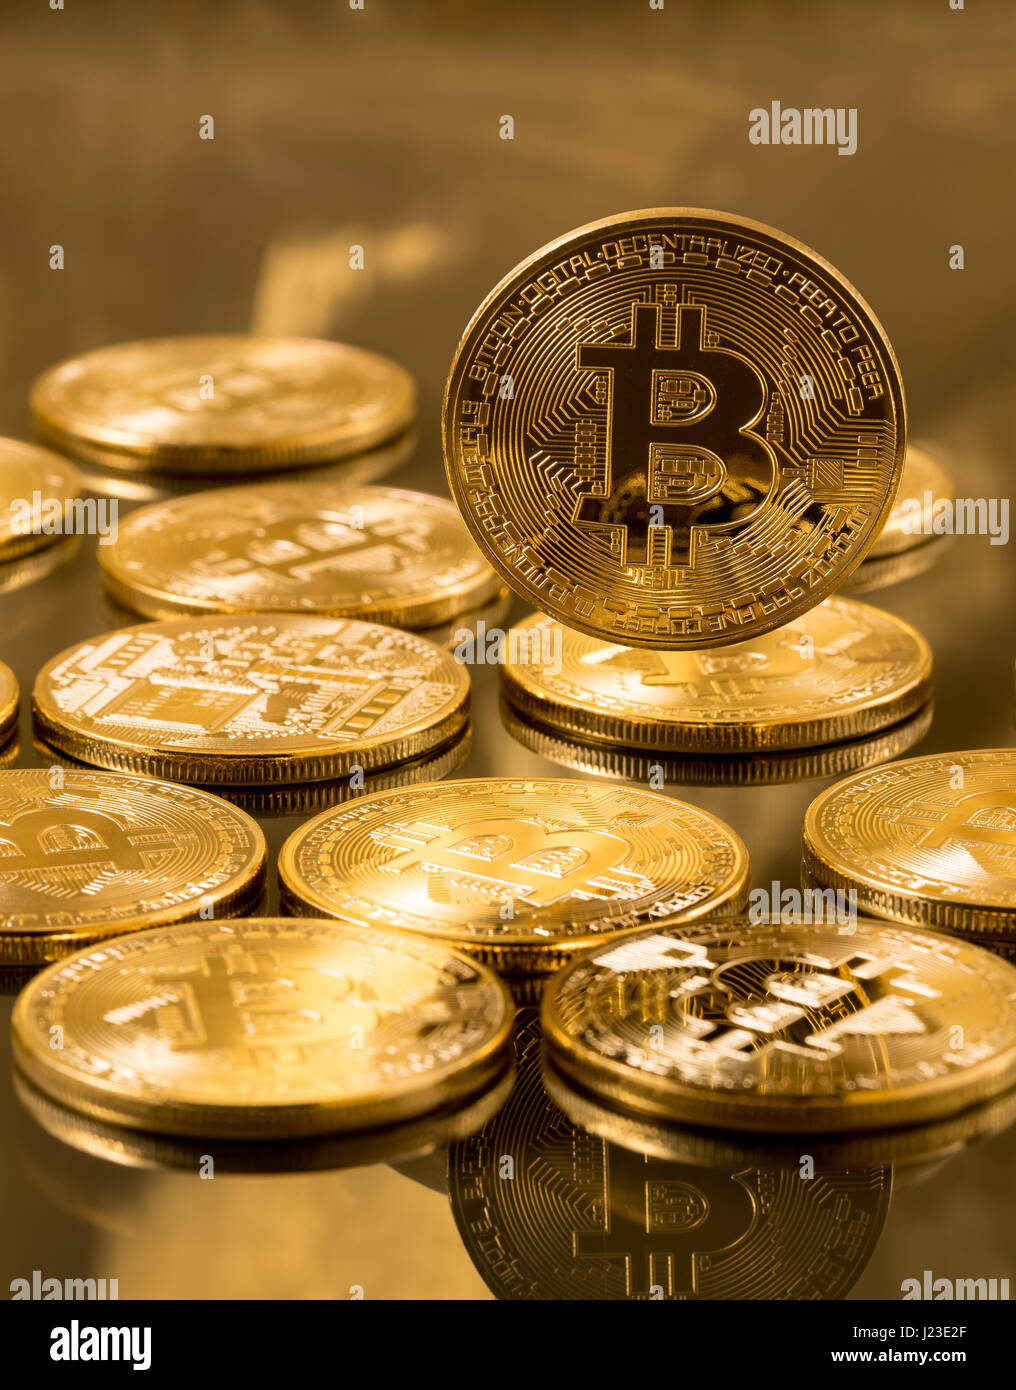 Pila de bitcoins sobre fondo dorado - Concepto de moneda y cyber blockchain Foto de stock